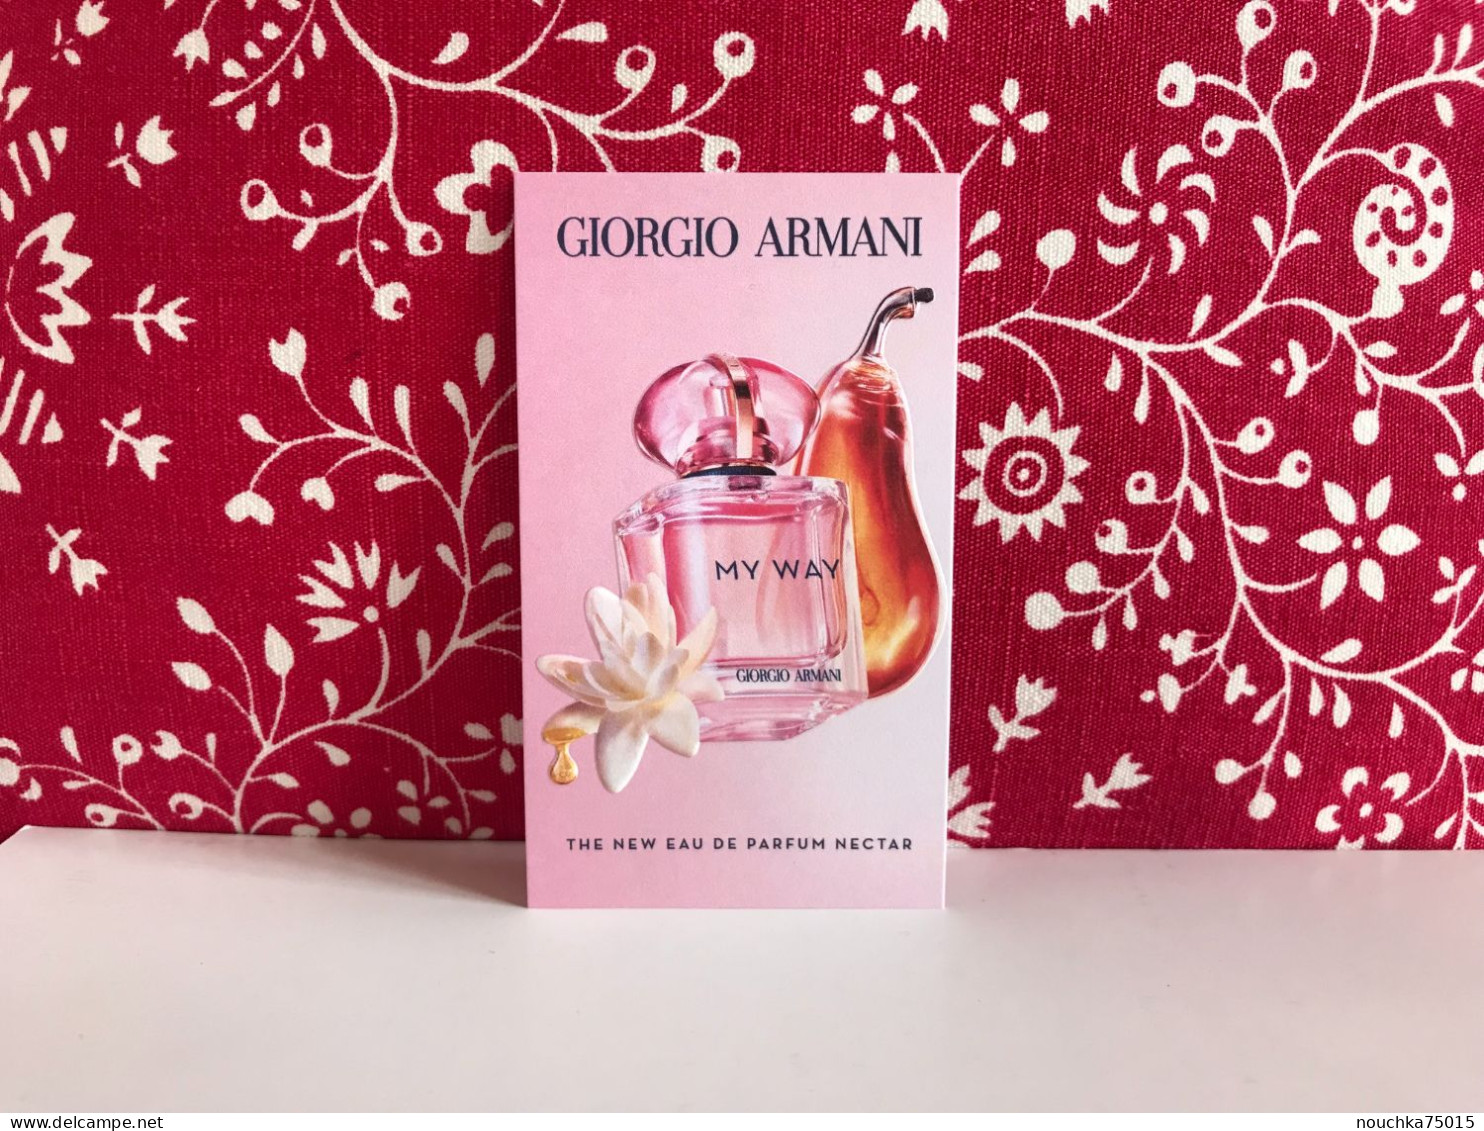 Giorgio Armani - My Way, Eau De Parfum Nectar - Modernas (desde 1961)